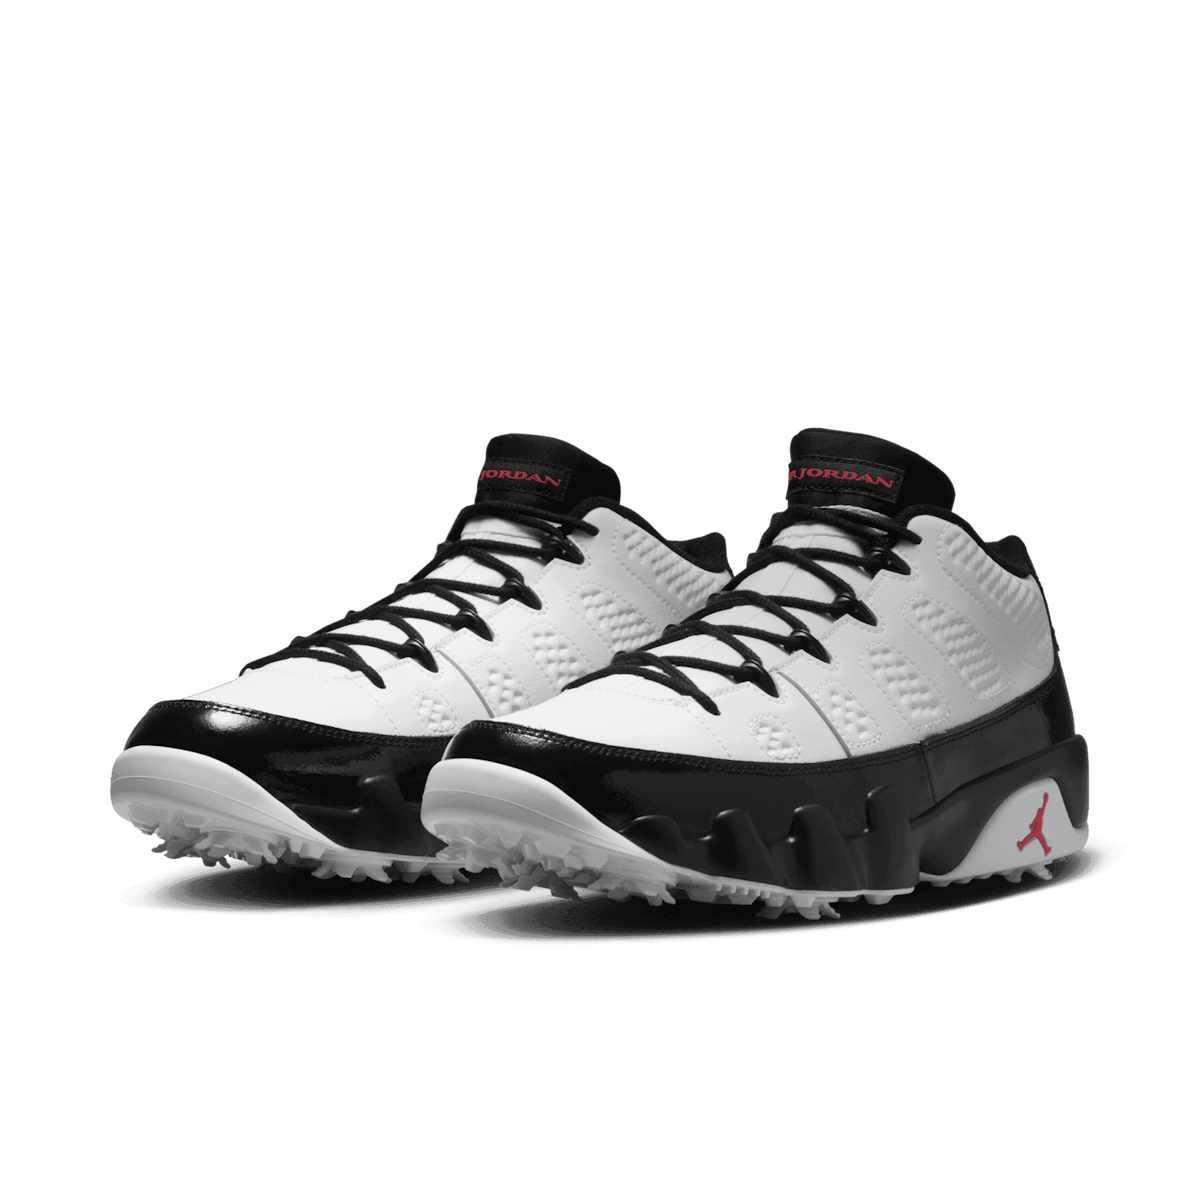 Air Jordan 9 Golf White Black Angle 2